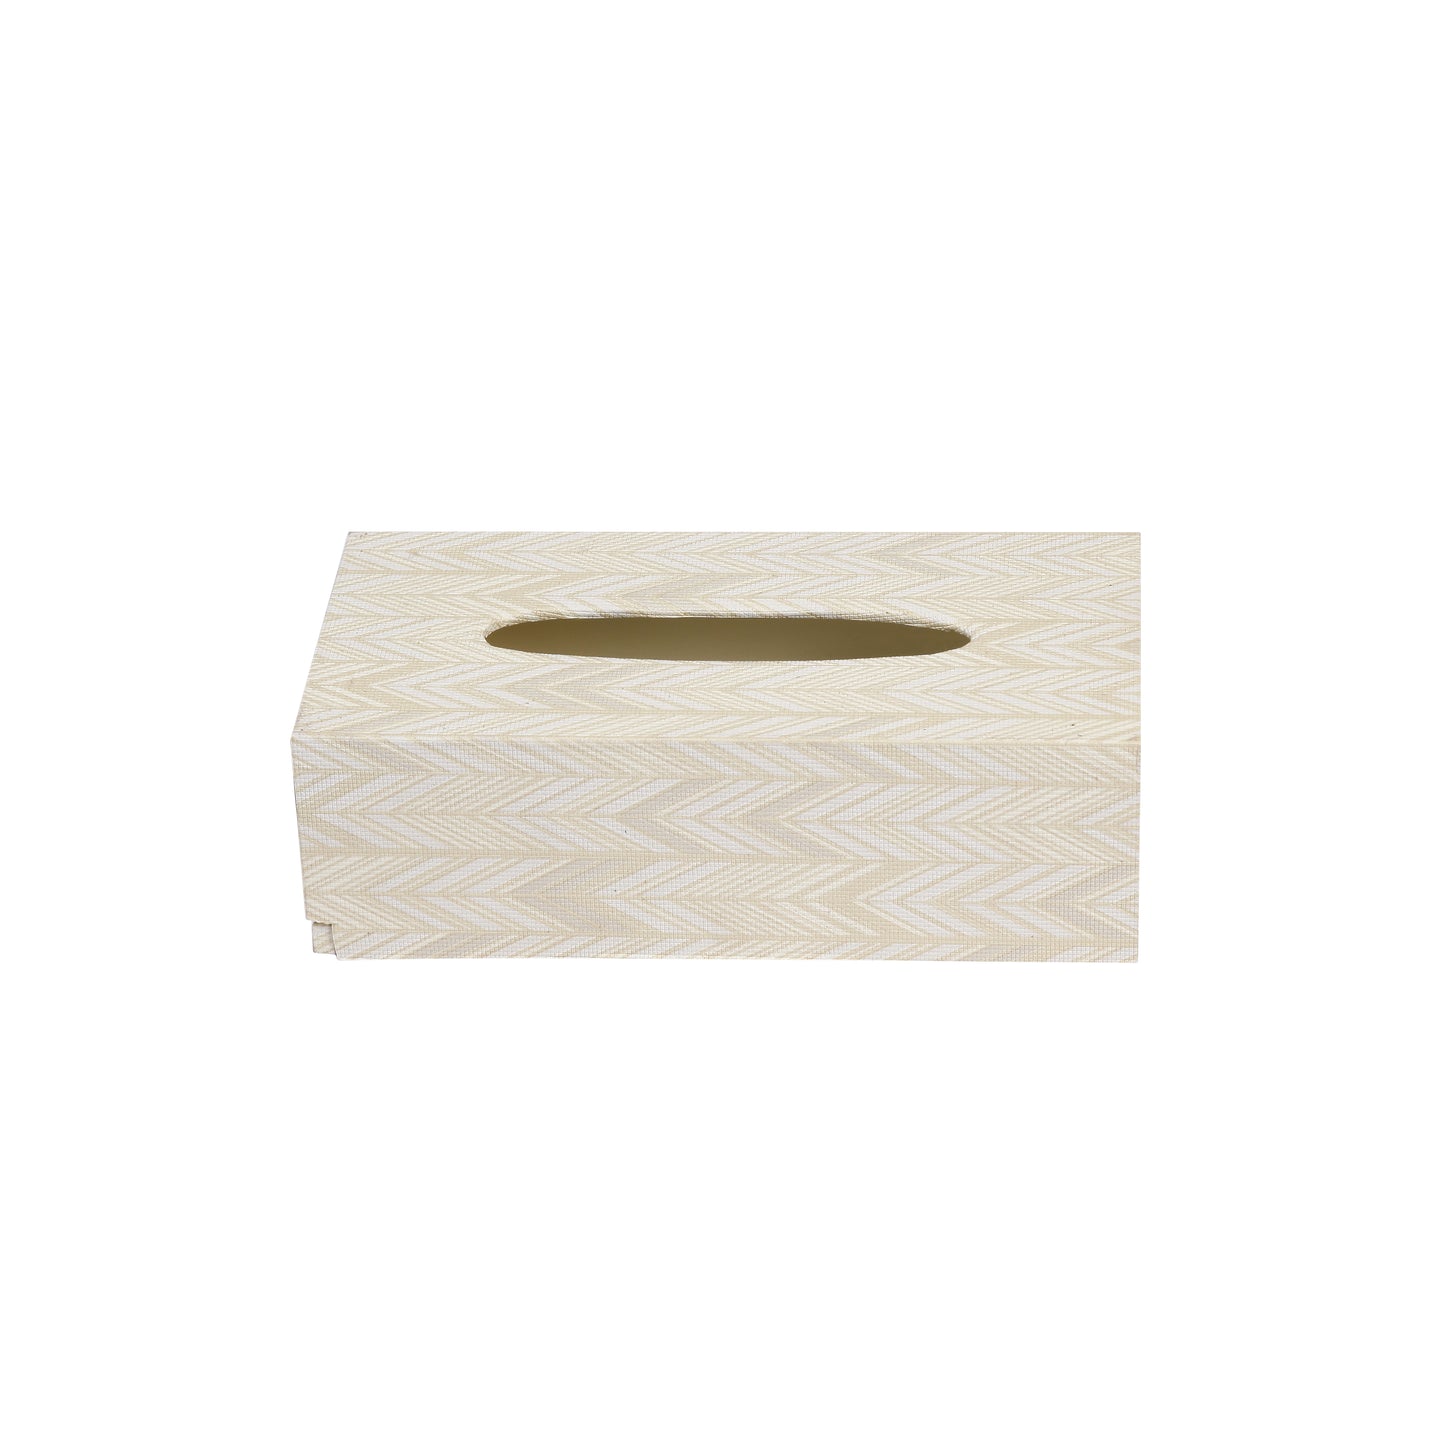 A Tiny Mistake Golden Herringbone Rectangle Tissue Box, 26 x 13 x 8 cm